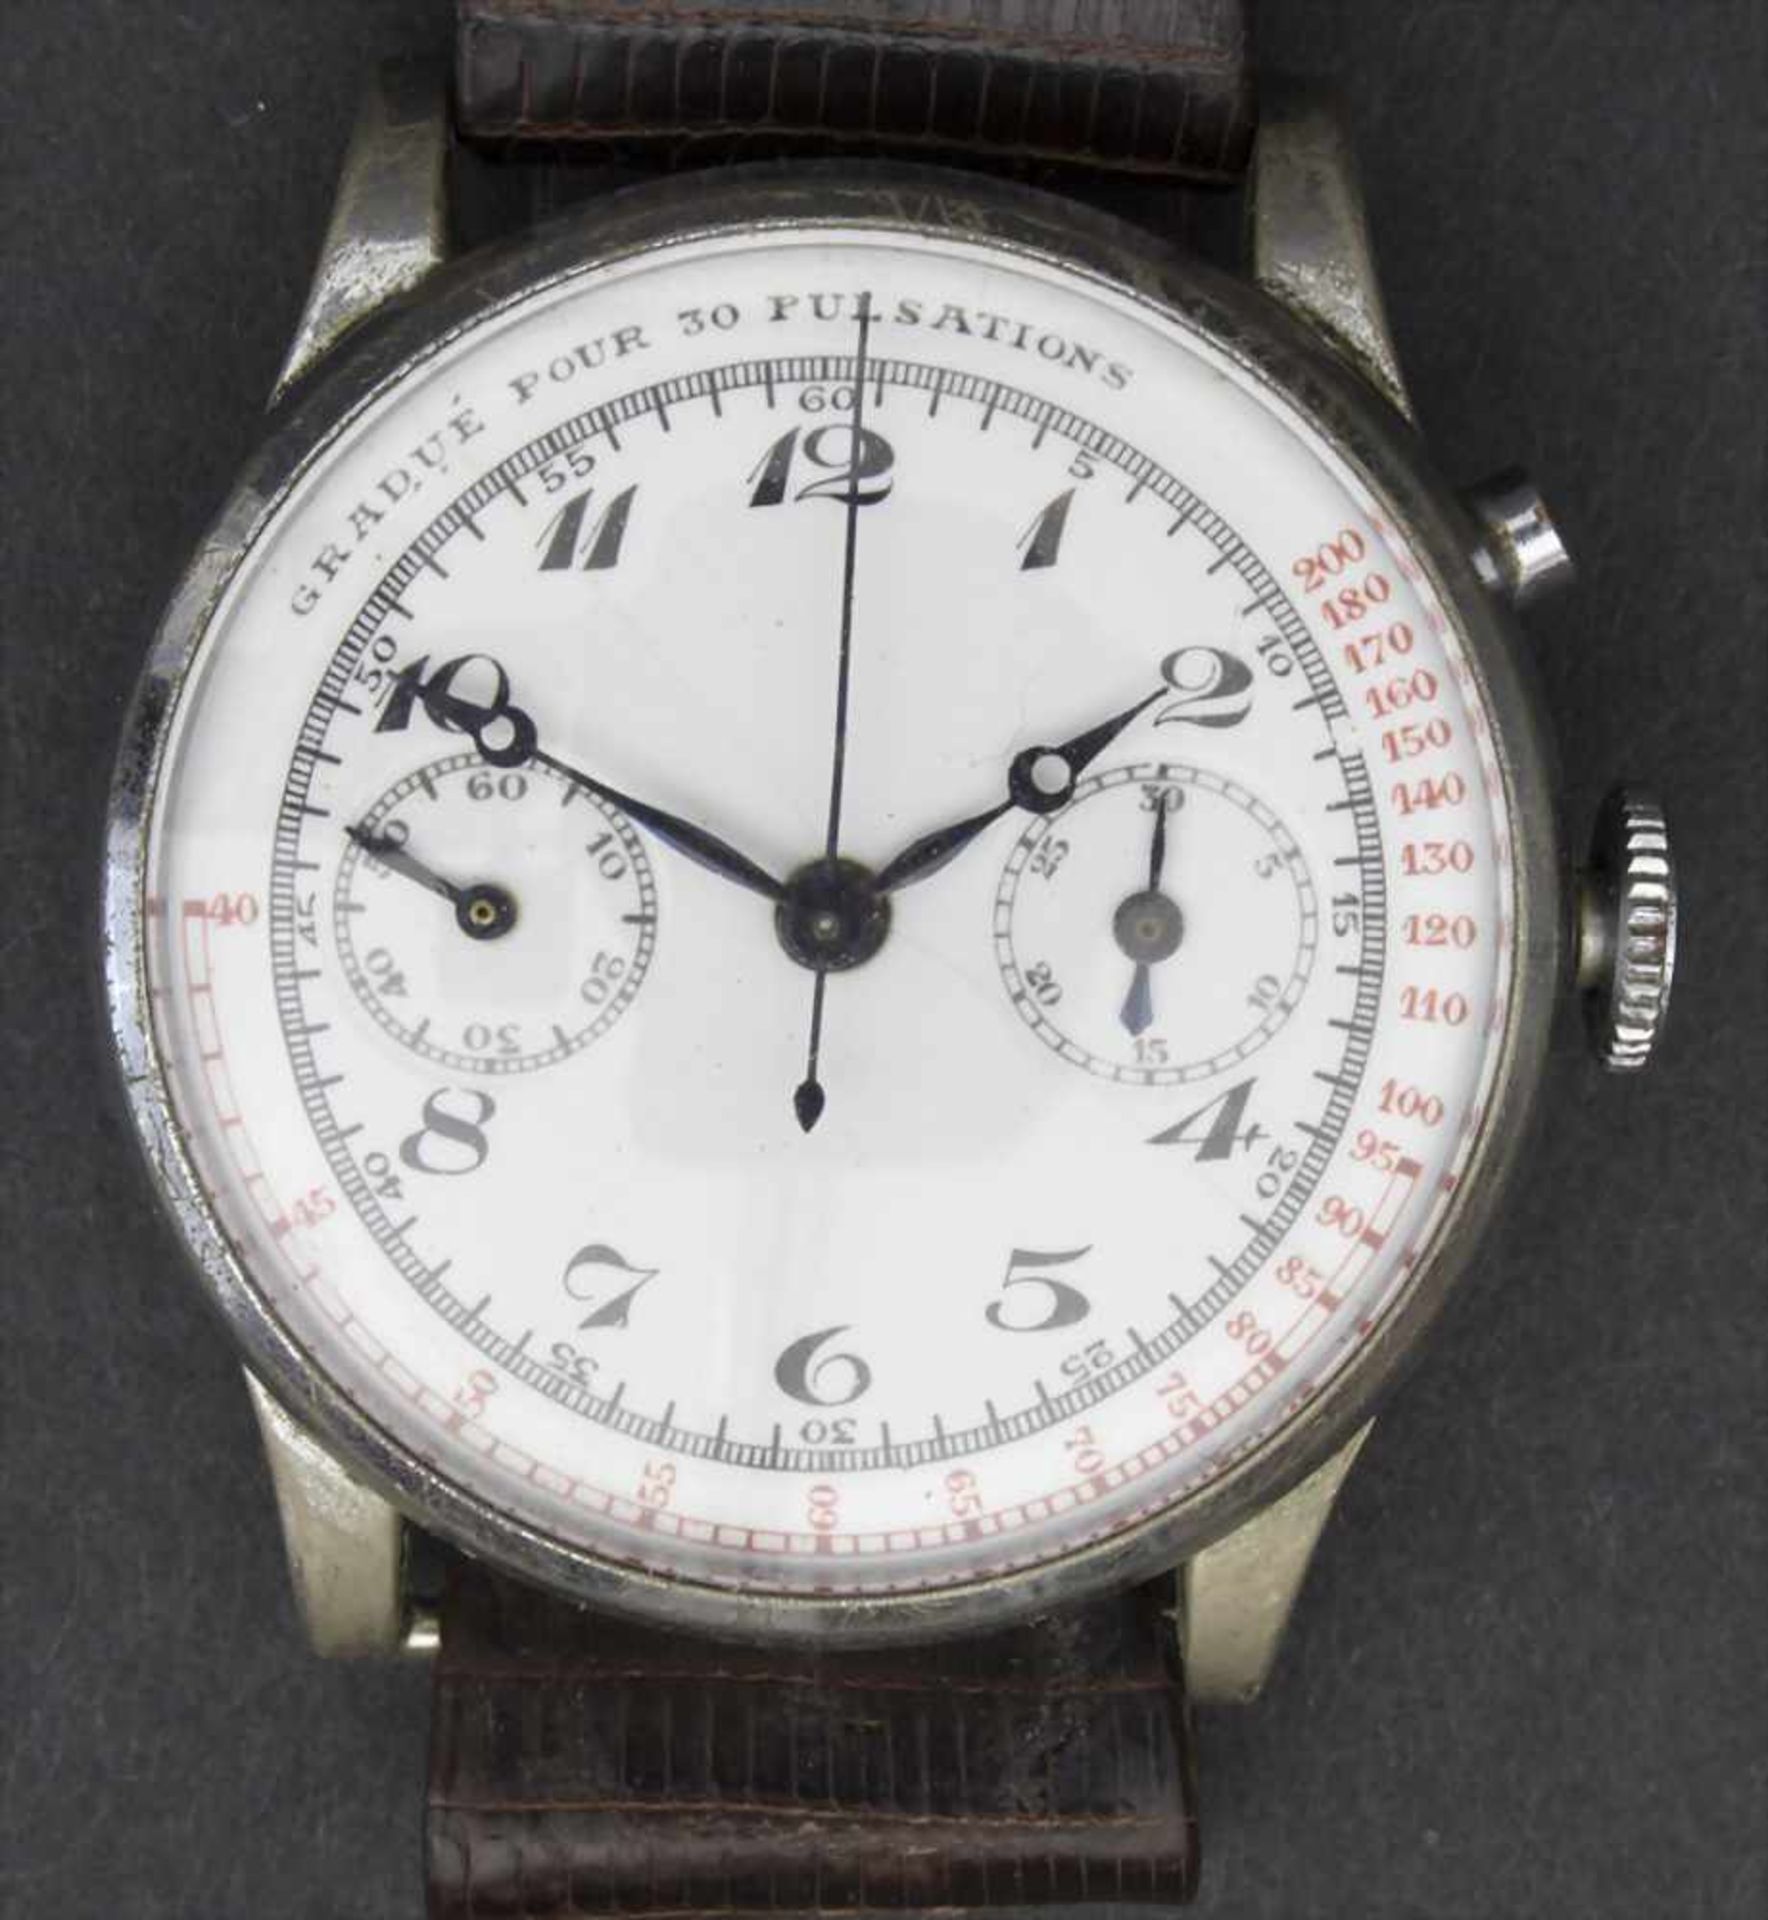 Chronograph, Lemania, Schweiz, um 1935Gehäuse: Metall vernickelt, Boden gedrückt, Stahl,Zifferblatt: